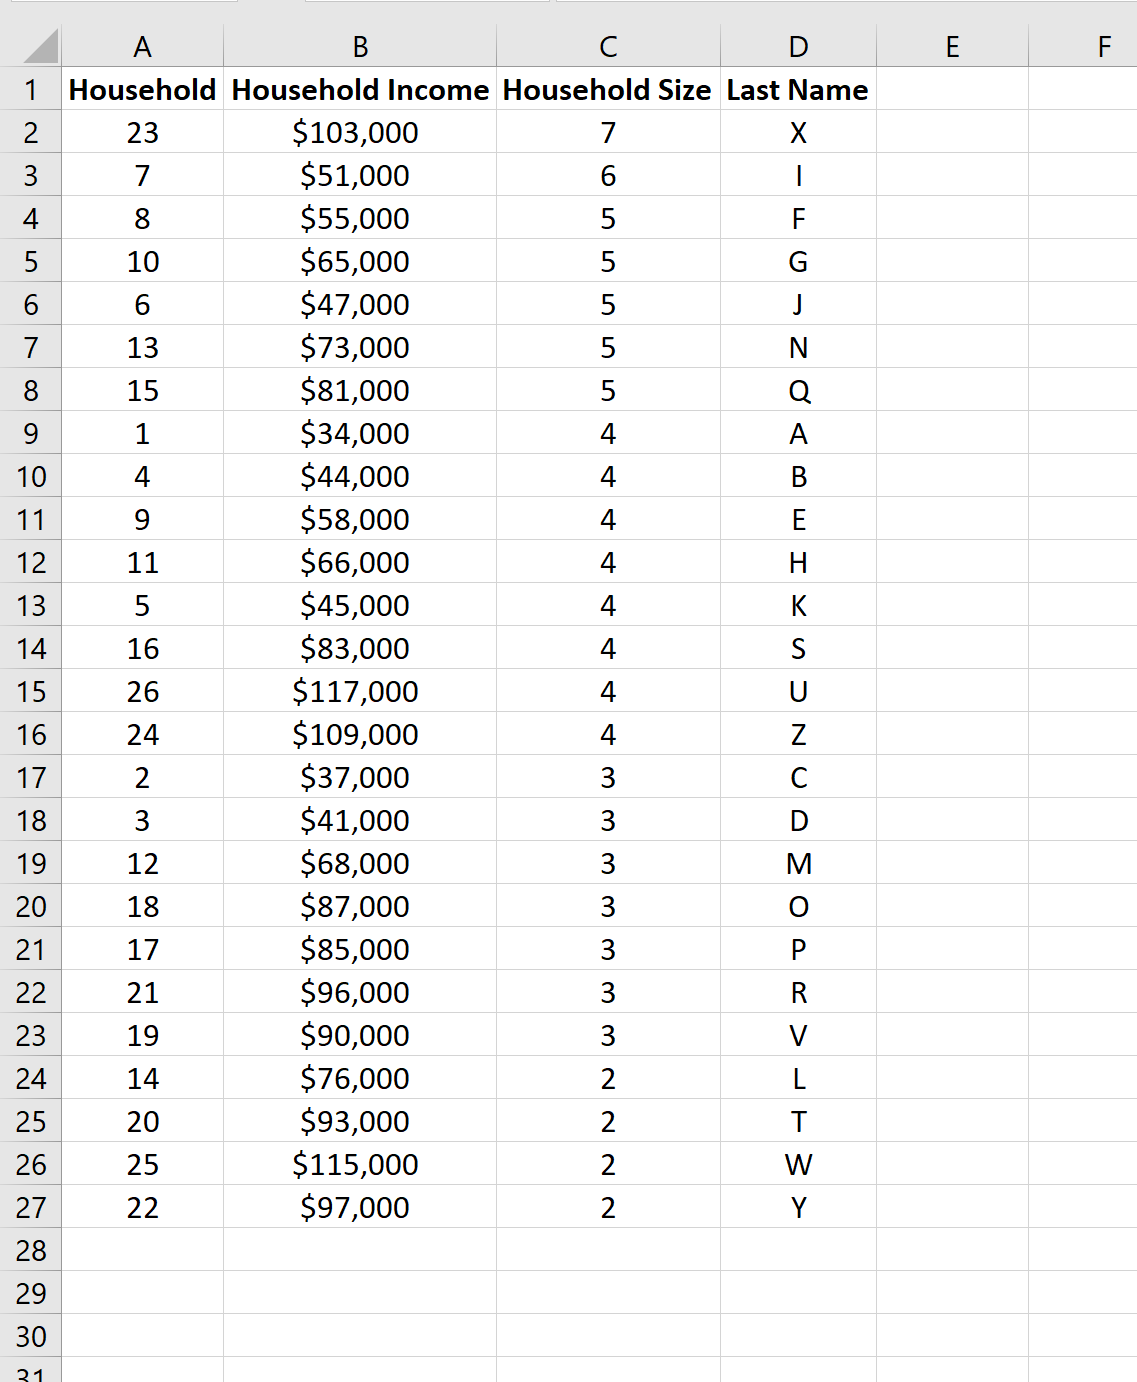 Multiple column sort in Excel